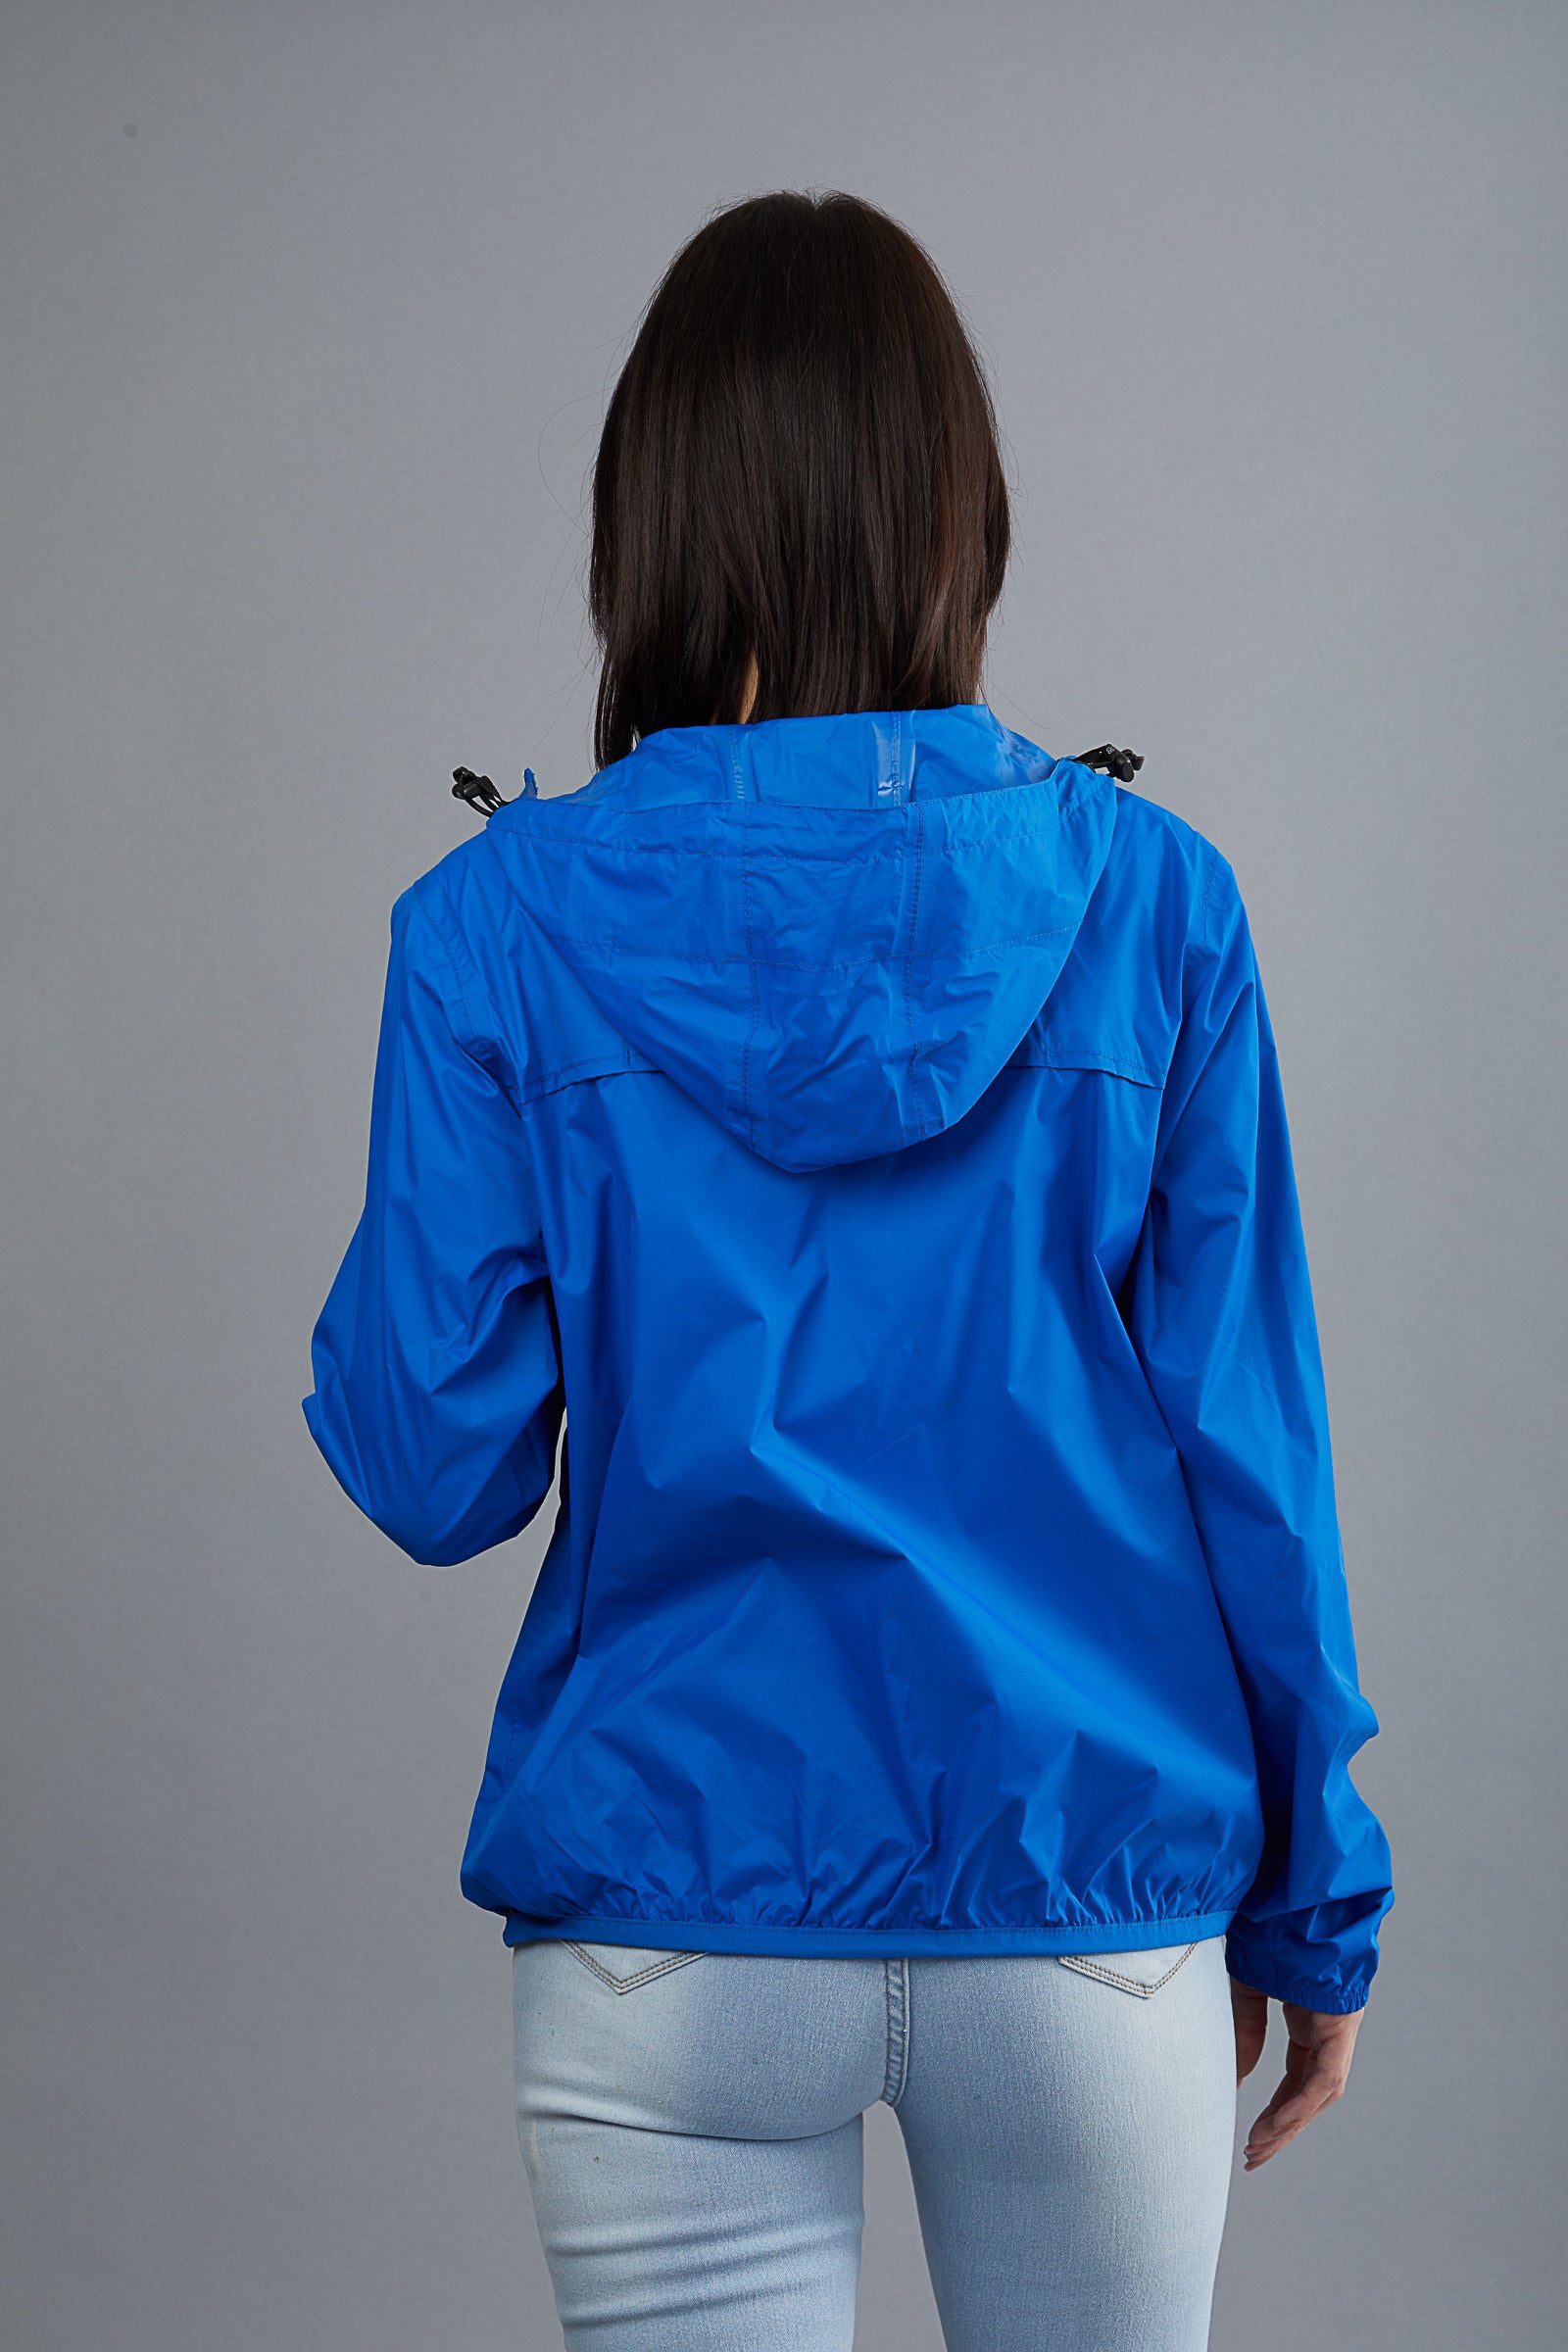 Royal blue full zip packable rain jacket and windbreaker - O8Lifestyle